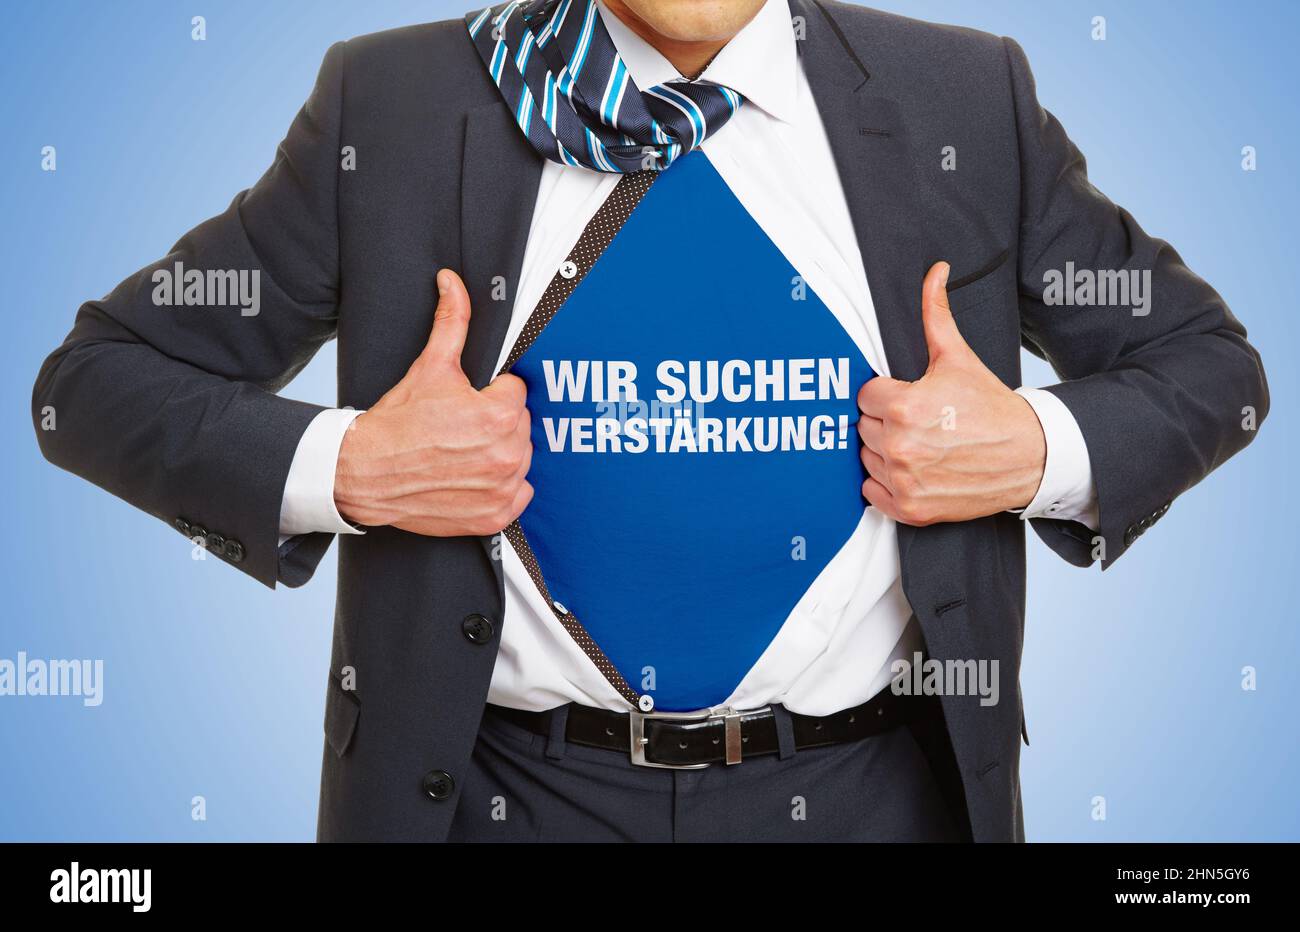 Businessman showing slogan Wir suchen Verstärkung! (German for: We are looking for reinforcements!) under shirt as human resource concept Stock Photo